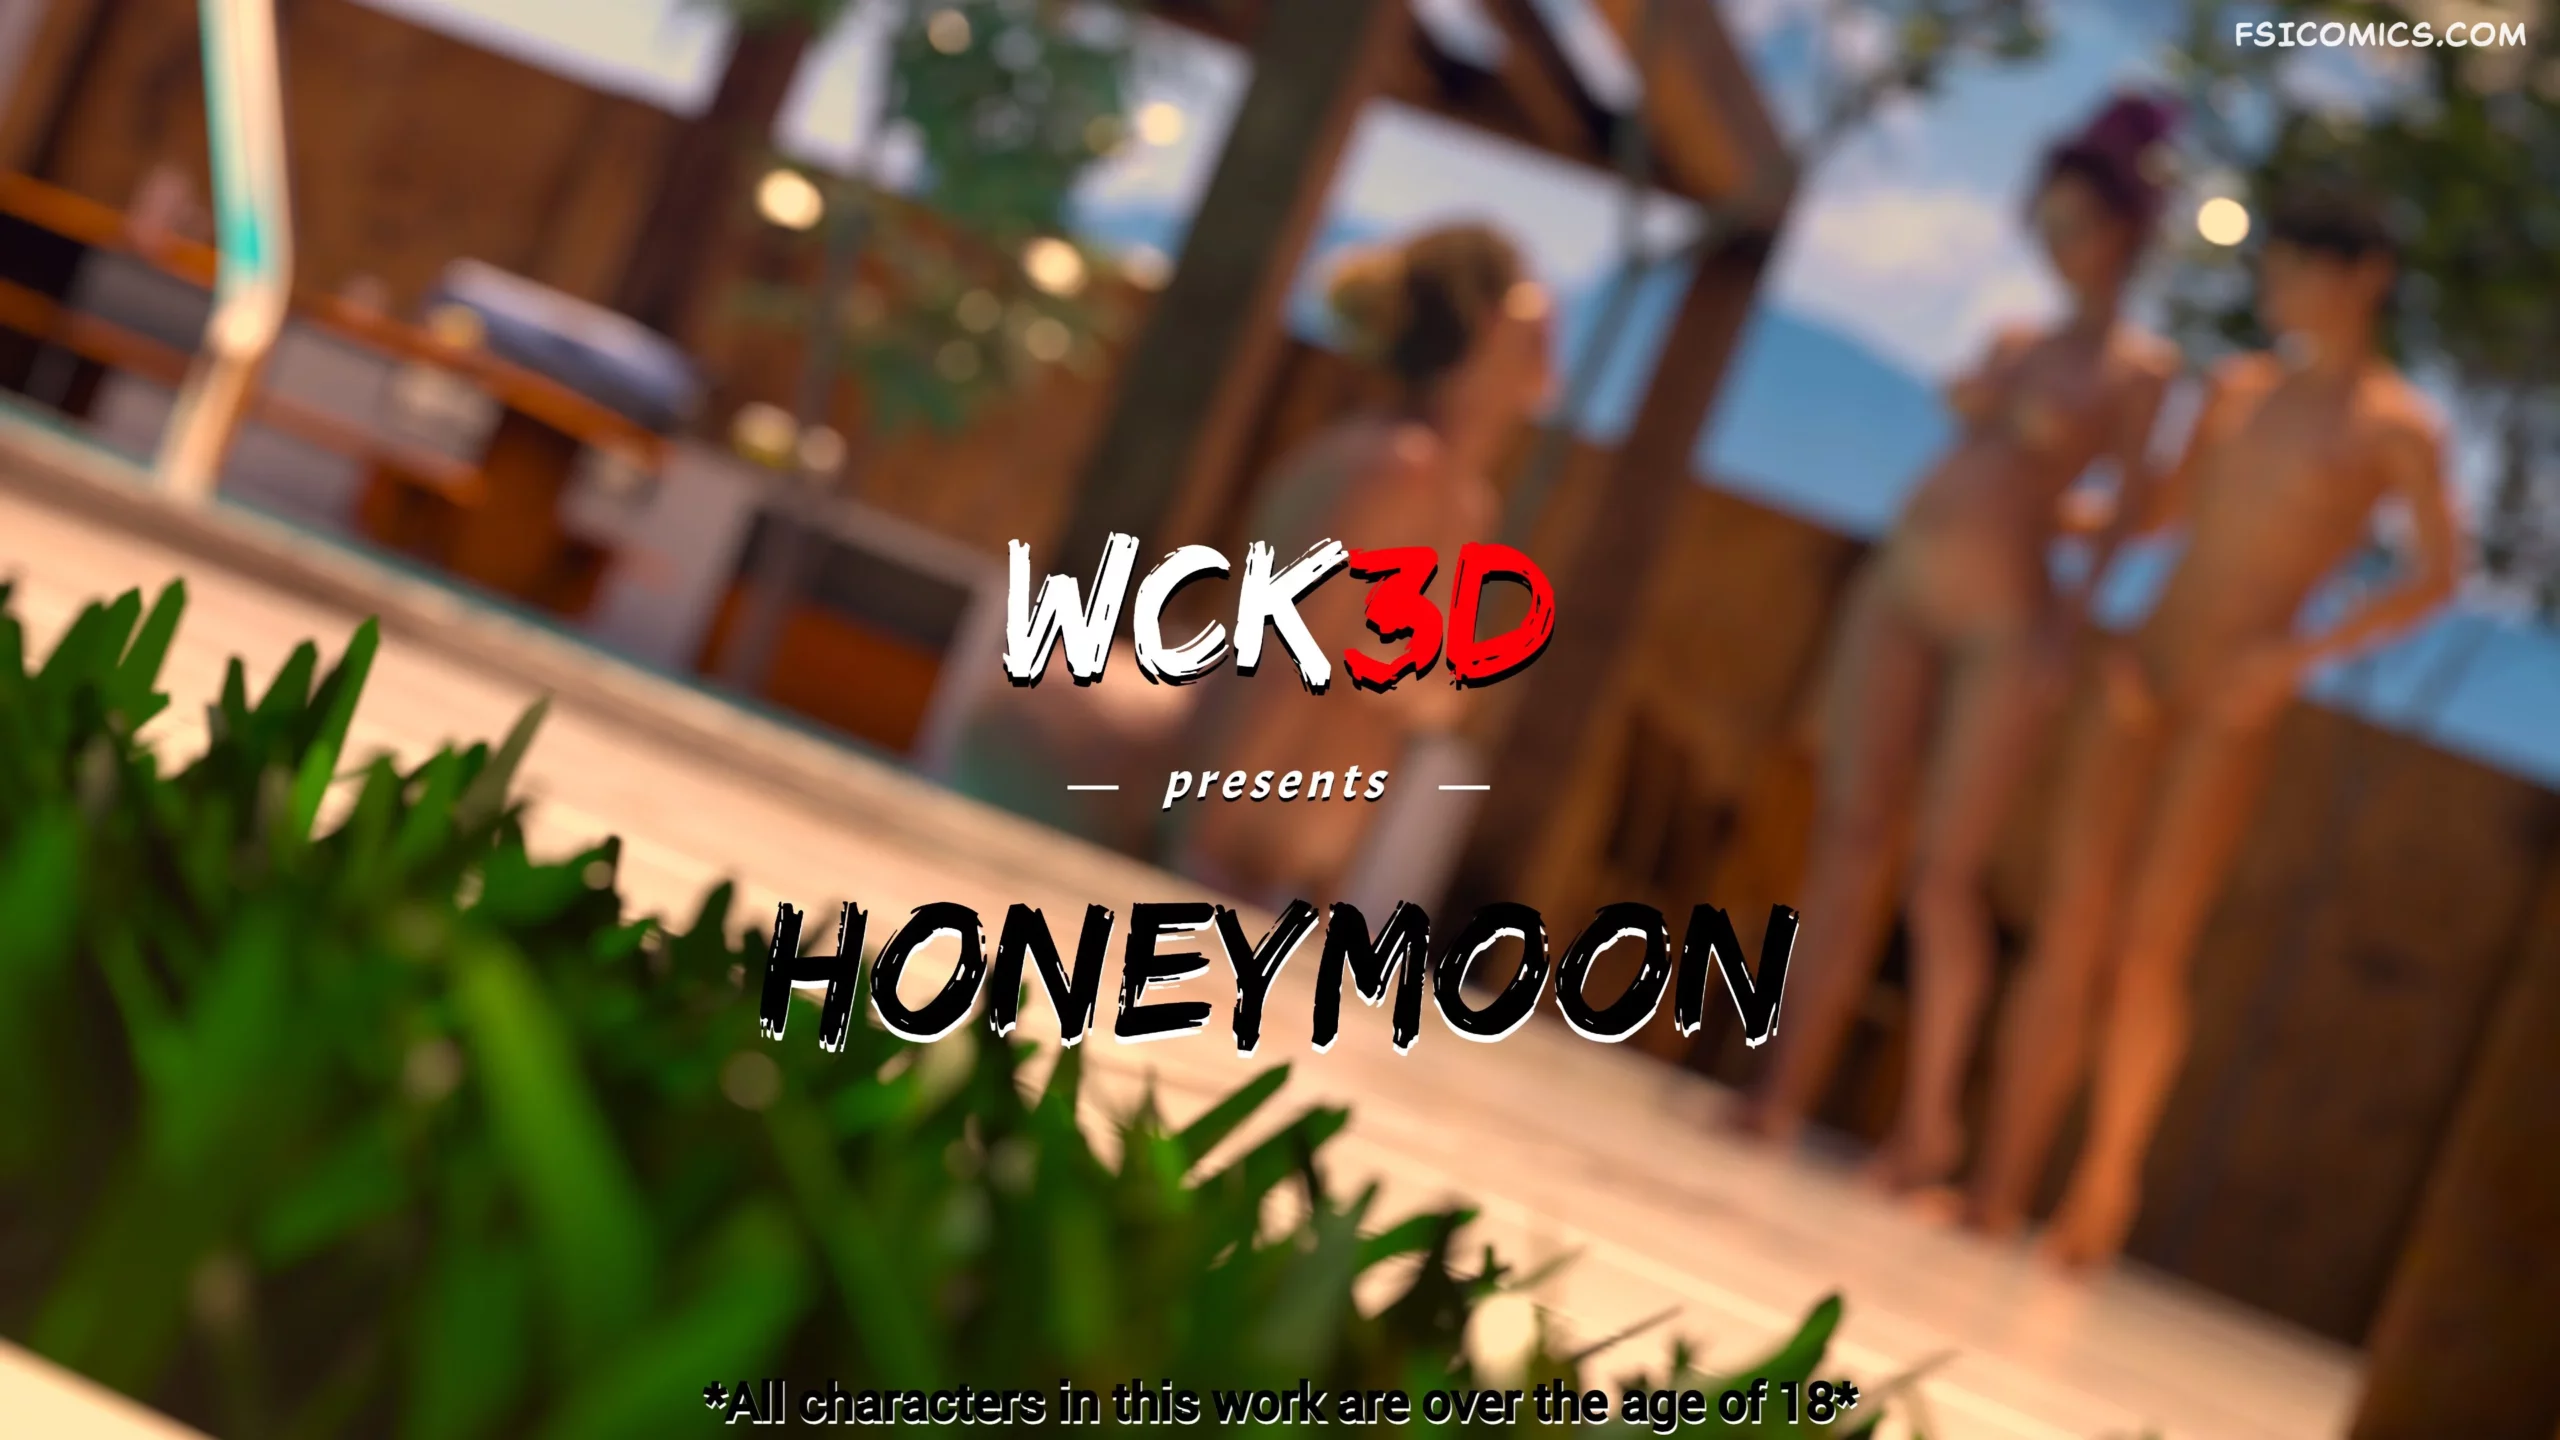 Between Us - Honeymoon - WCK3D - 11 - FSIComics